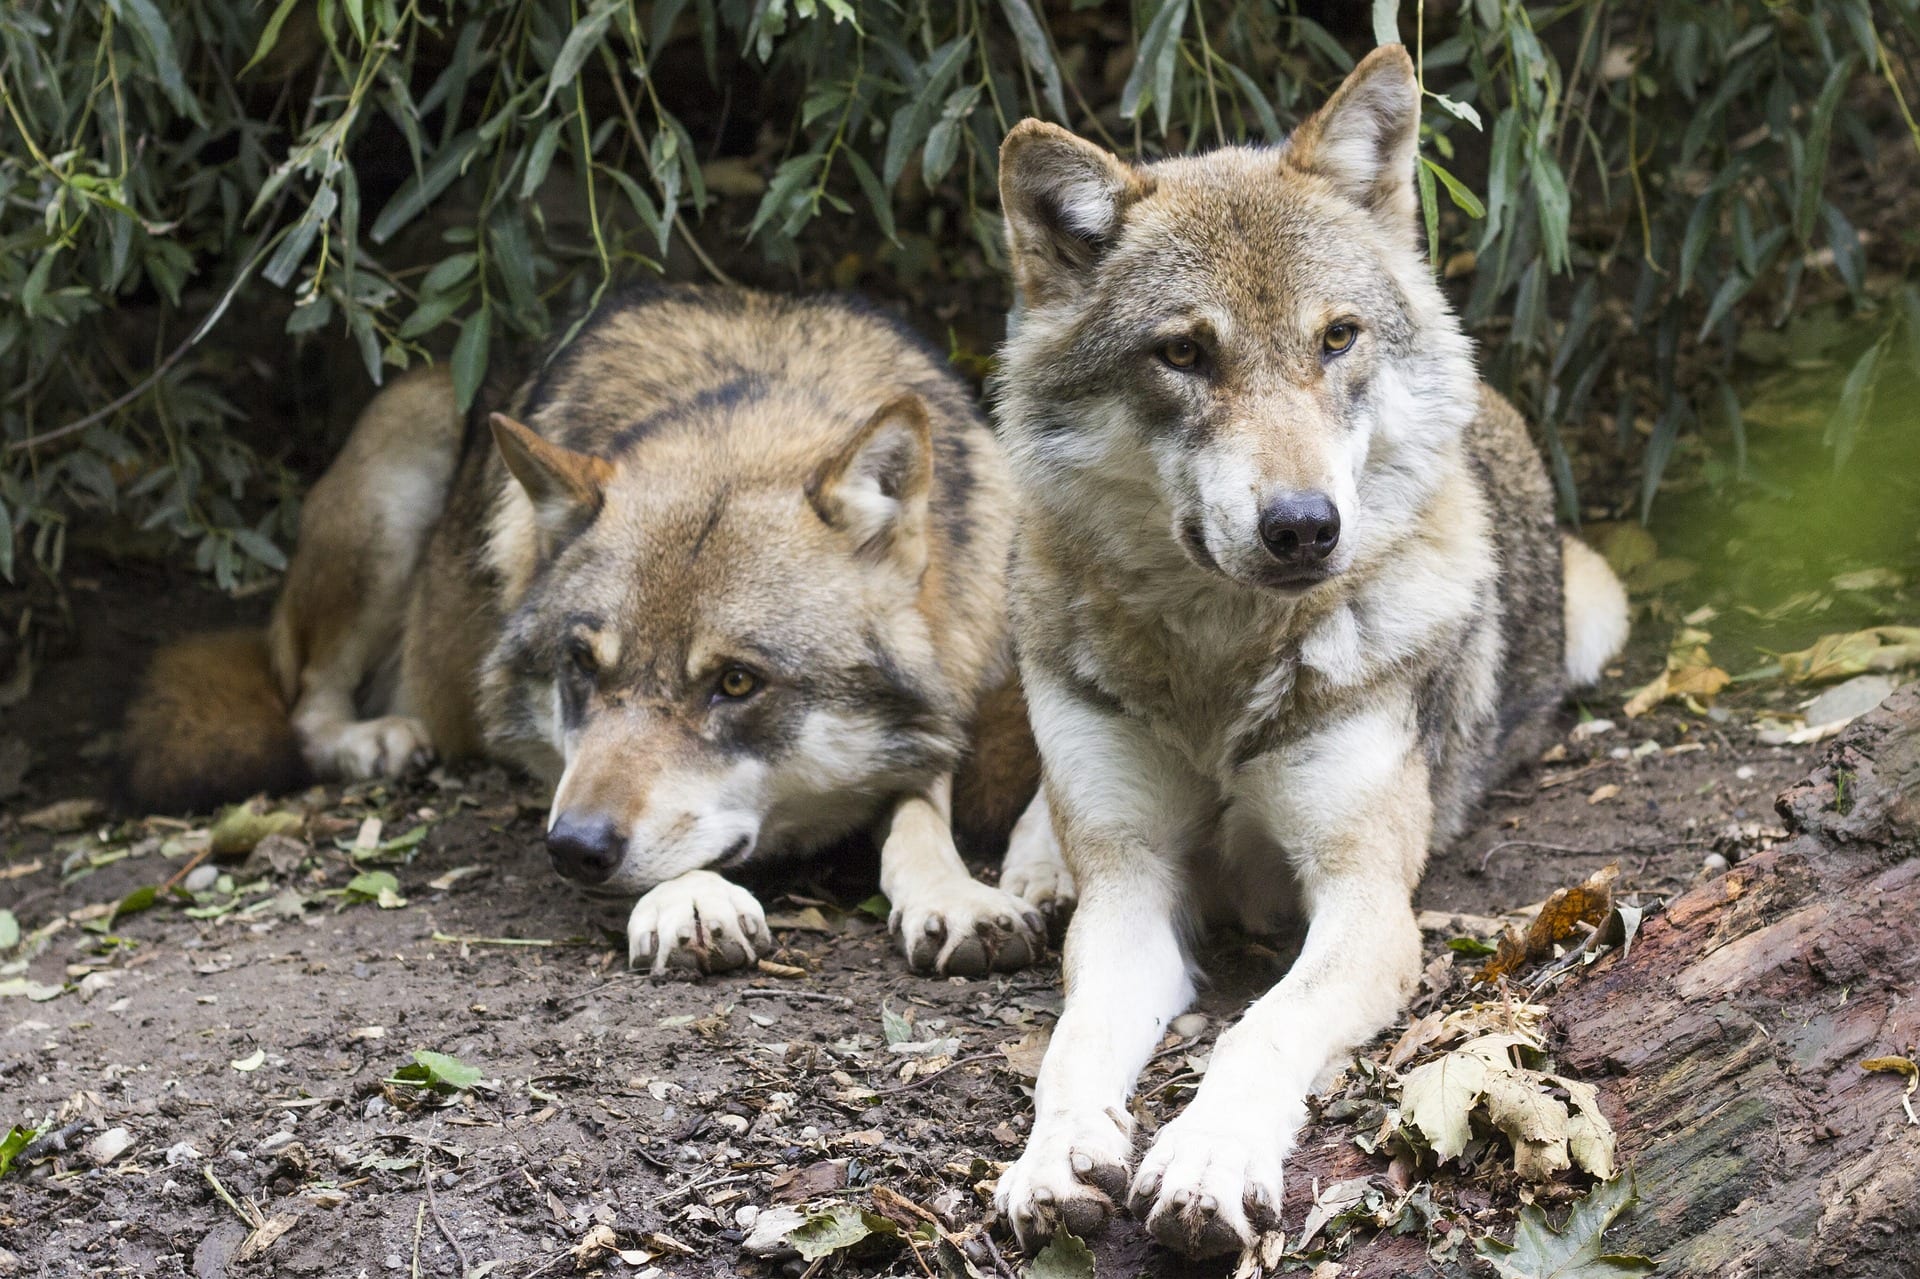 https://pixabay.com/en/wolves-canis-lupus-two-wolves-1388558/